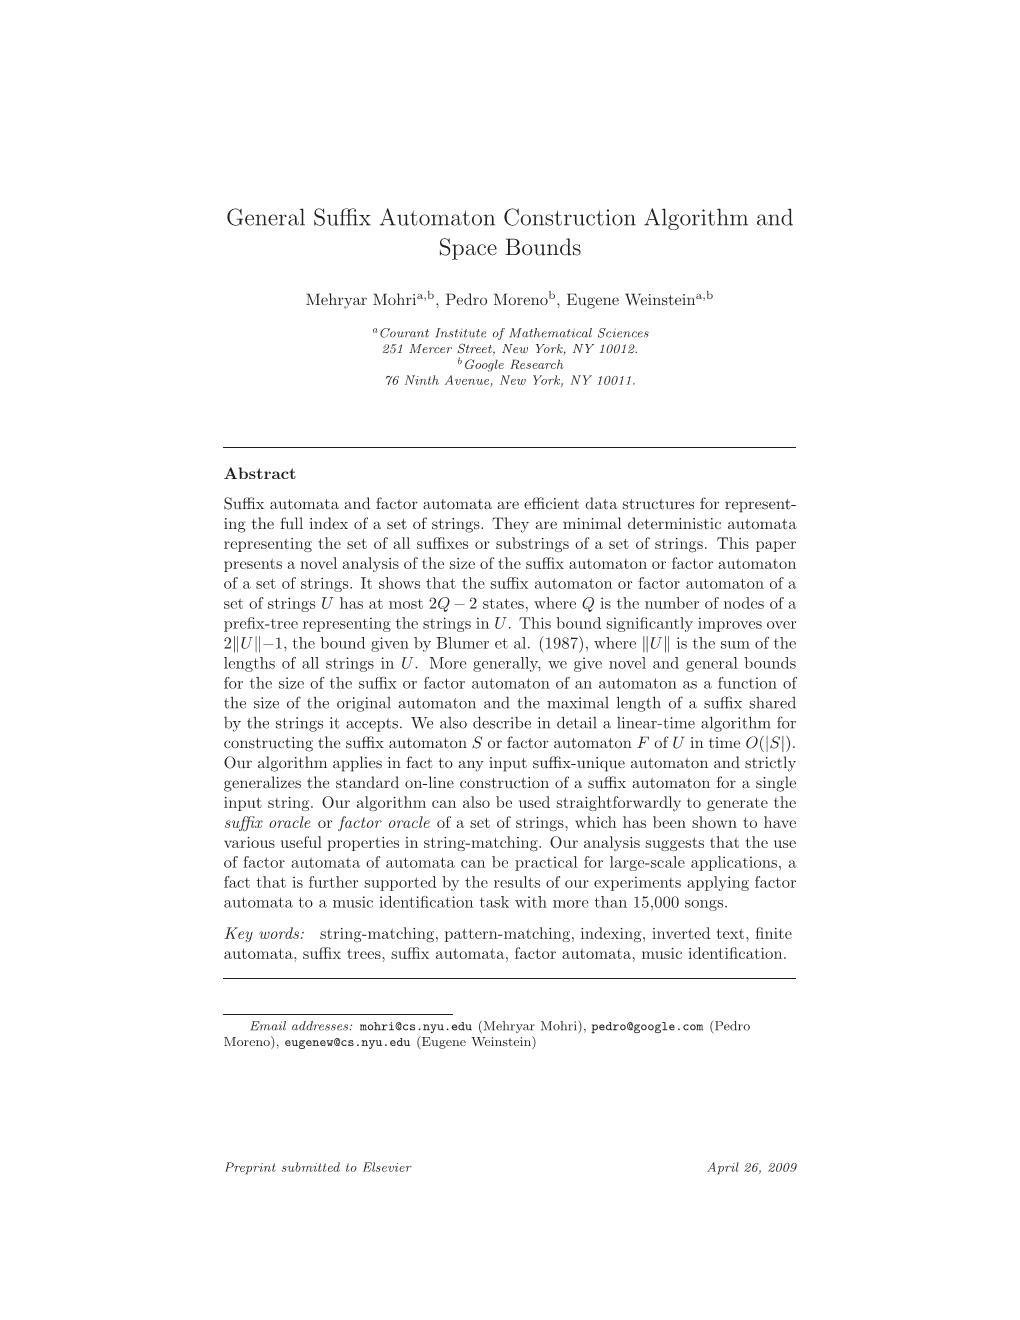 General Suffix Automaton Construction Algorithm and Space